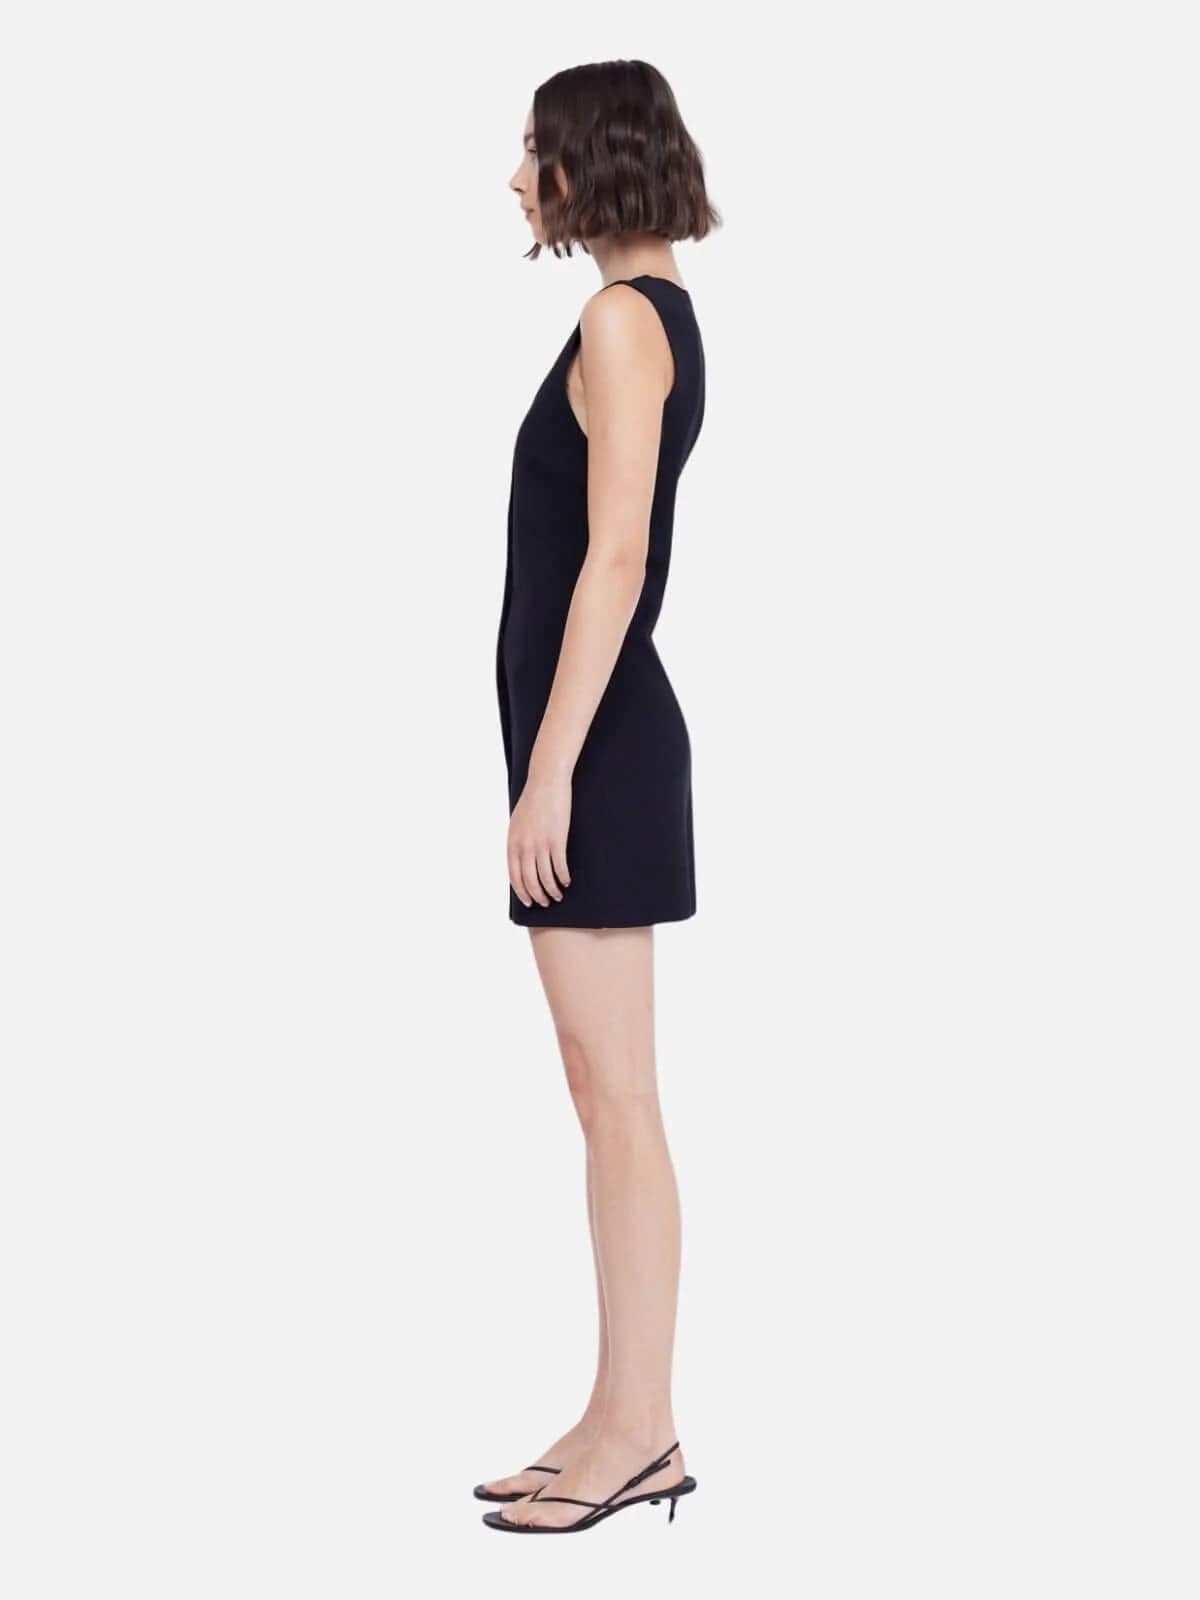 Bec + Bridge Dresses - Casual Bec + Bridge | Ilora Knit Mini Dress - Black